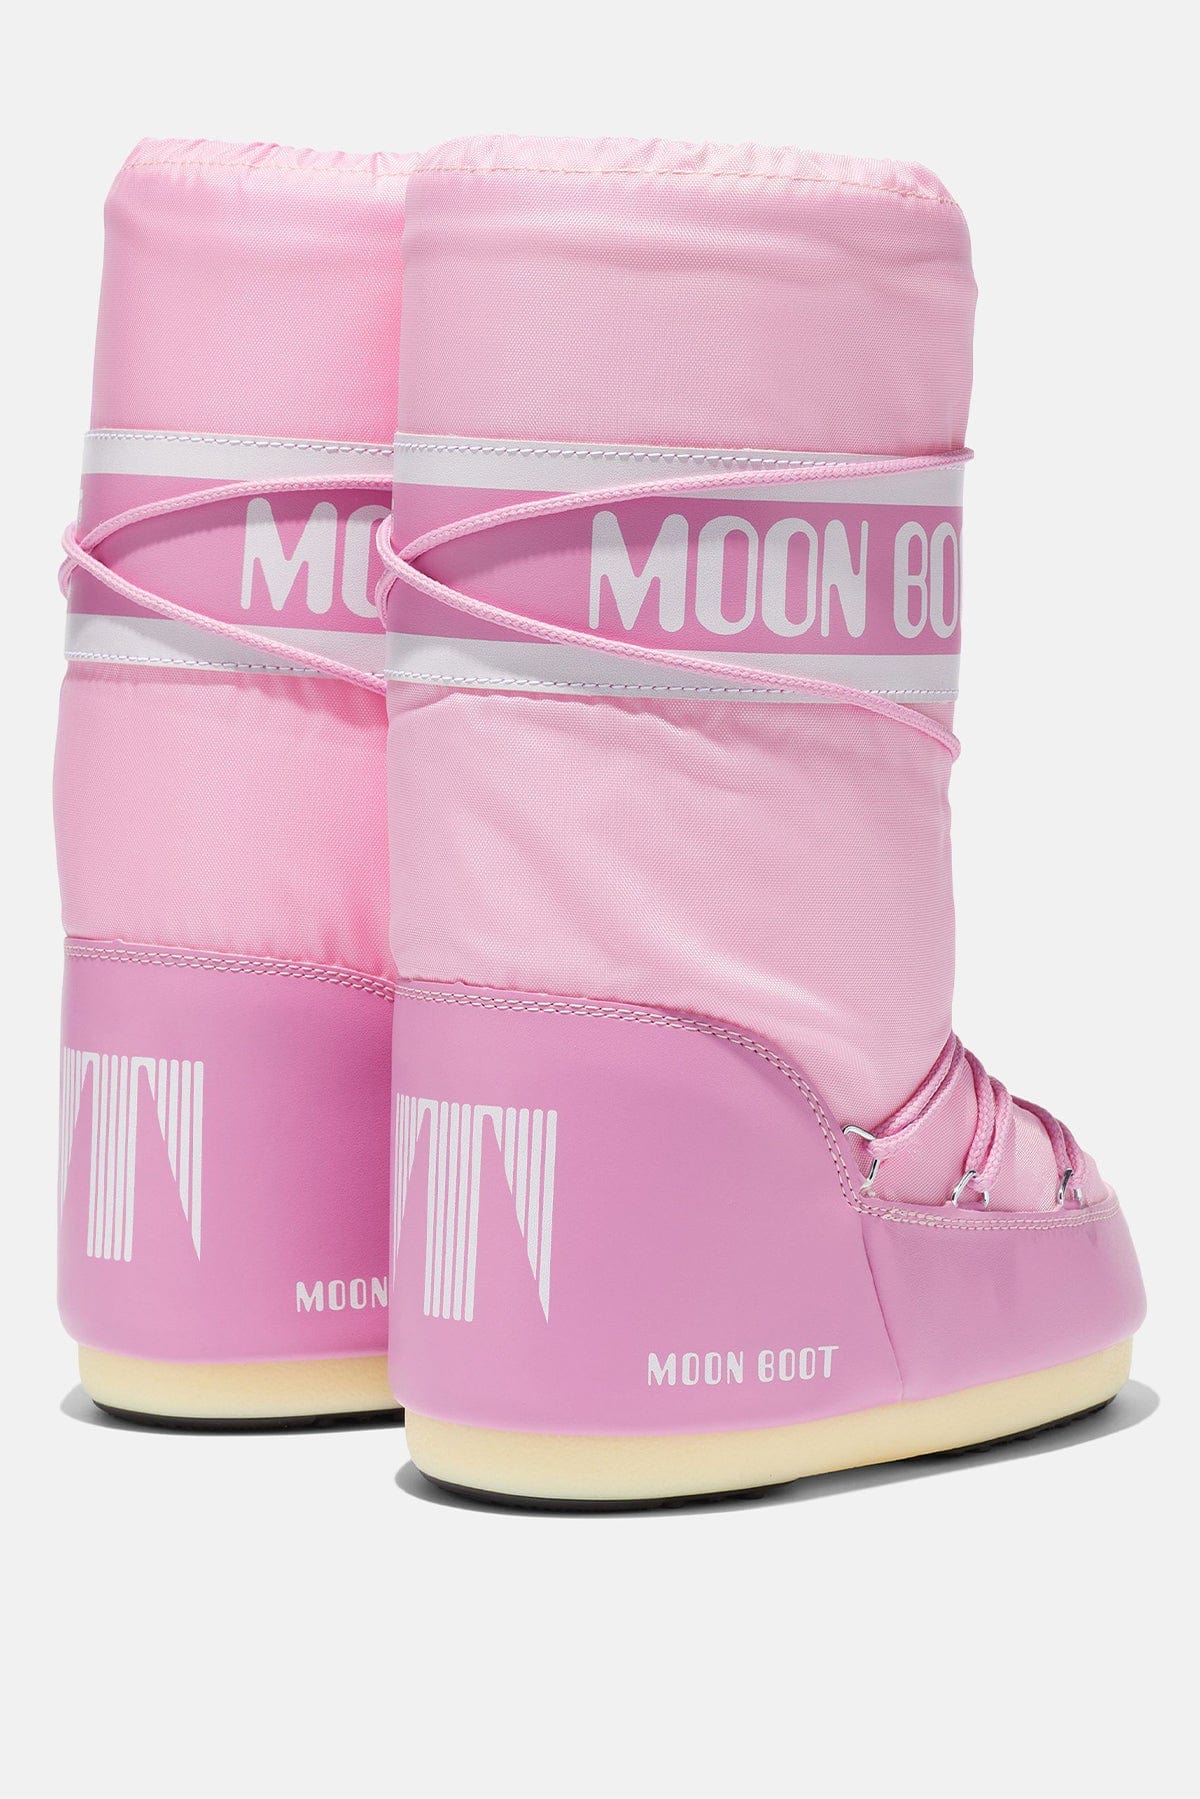 MOON BOOT CALZATURE  Moon Boot Donna Icon Nylon